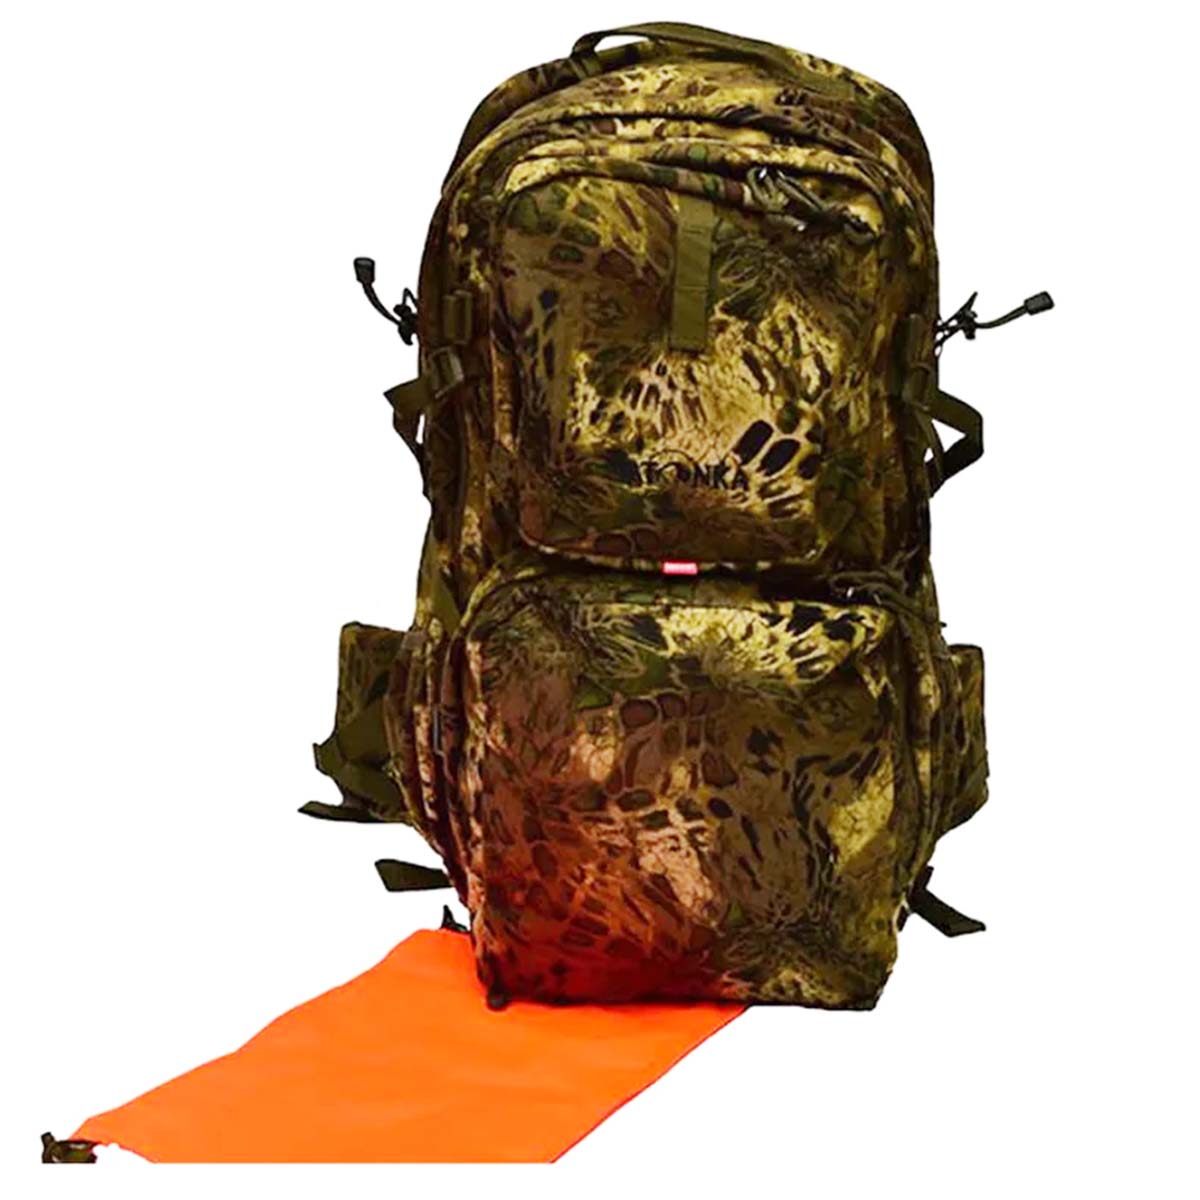 Tatonka Stealth Hunting Backpack 35L + 10L